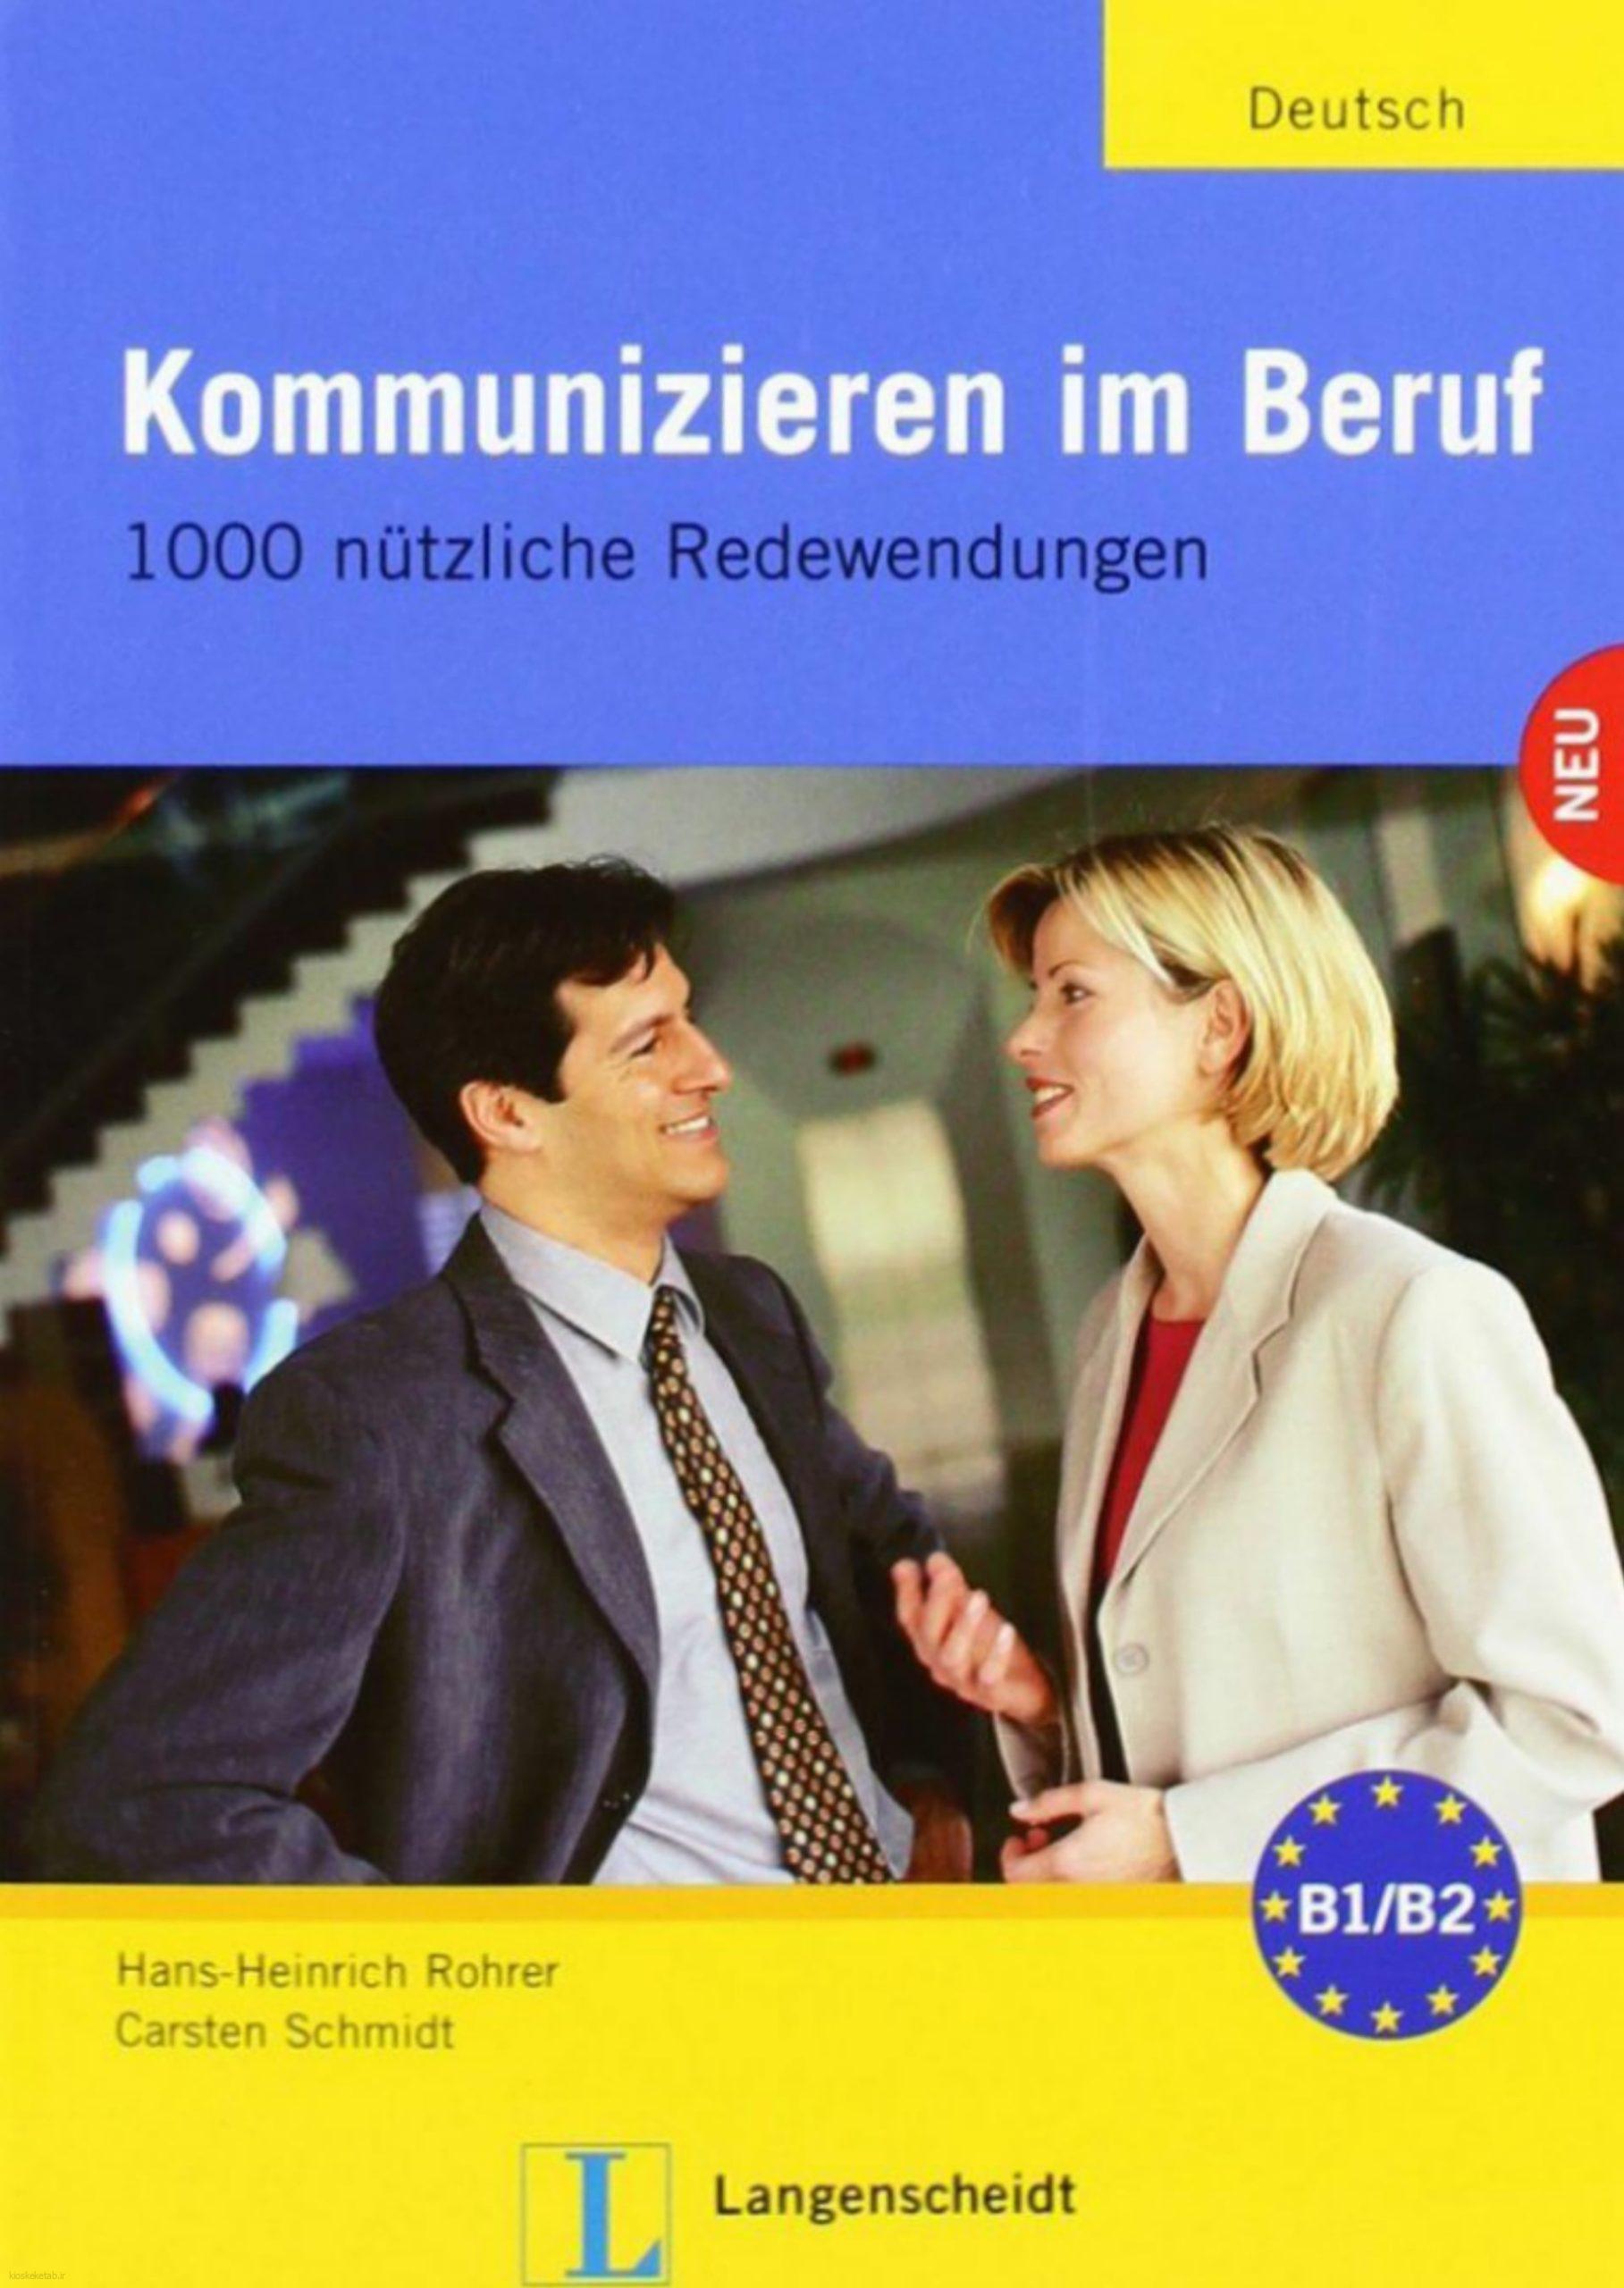 دانلود کتاب آلمانیkommunizieren im beruf